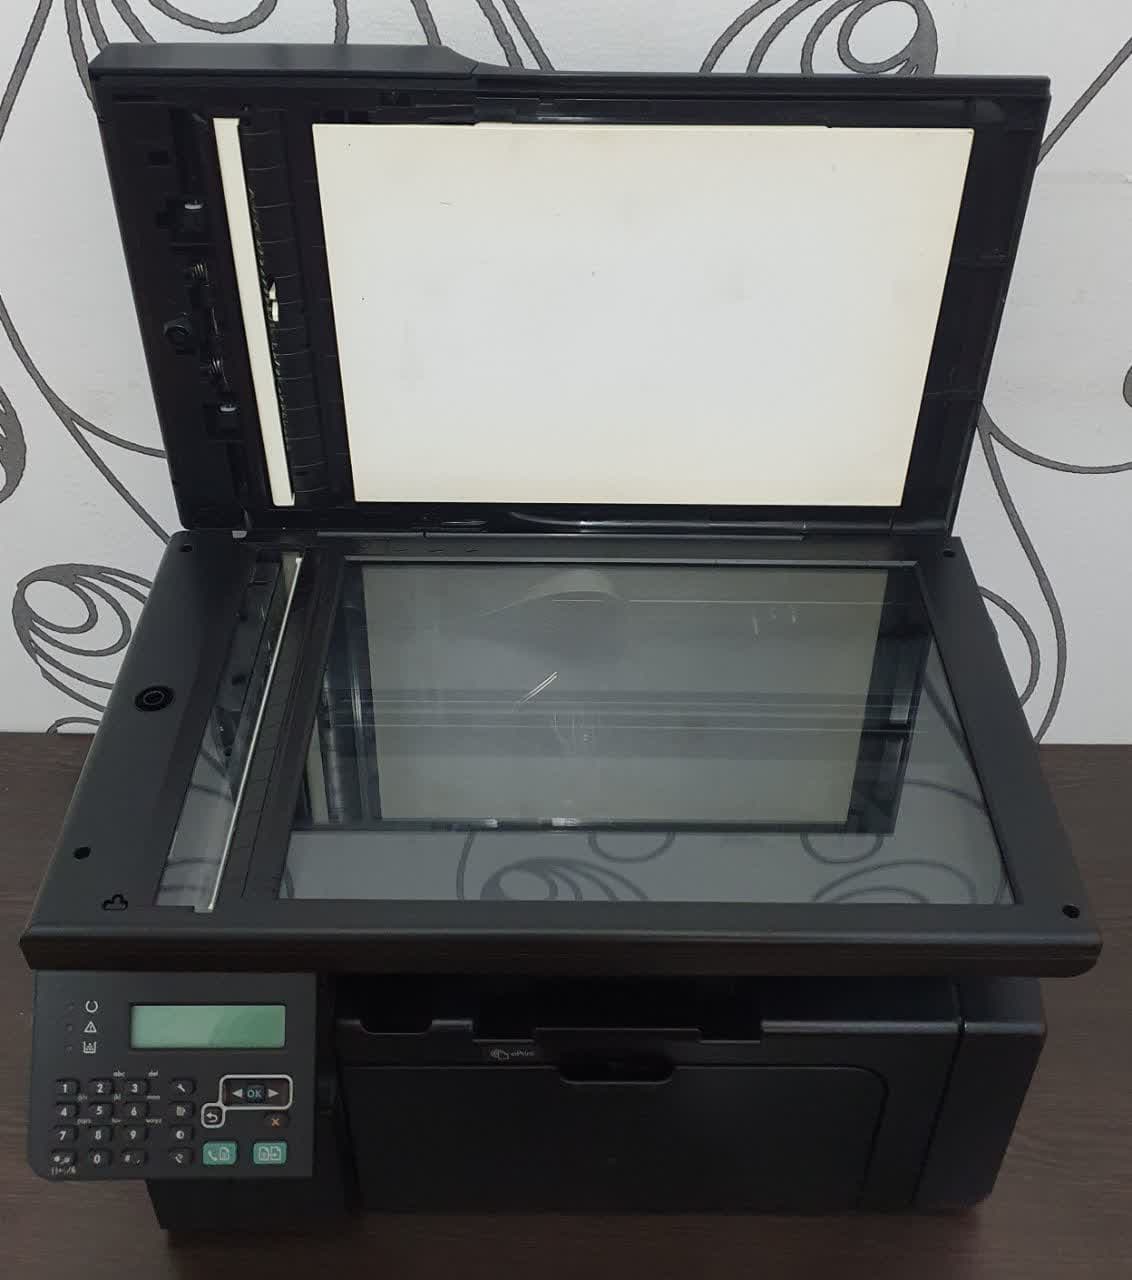 پرینتر استوک اچ پی مدل M1213nf ا HP LaserJet Pro MFP M1213nf Multifunction Printer